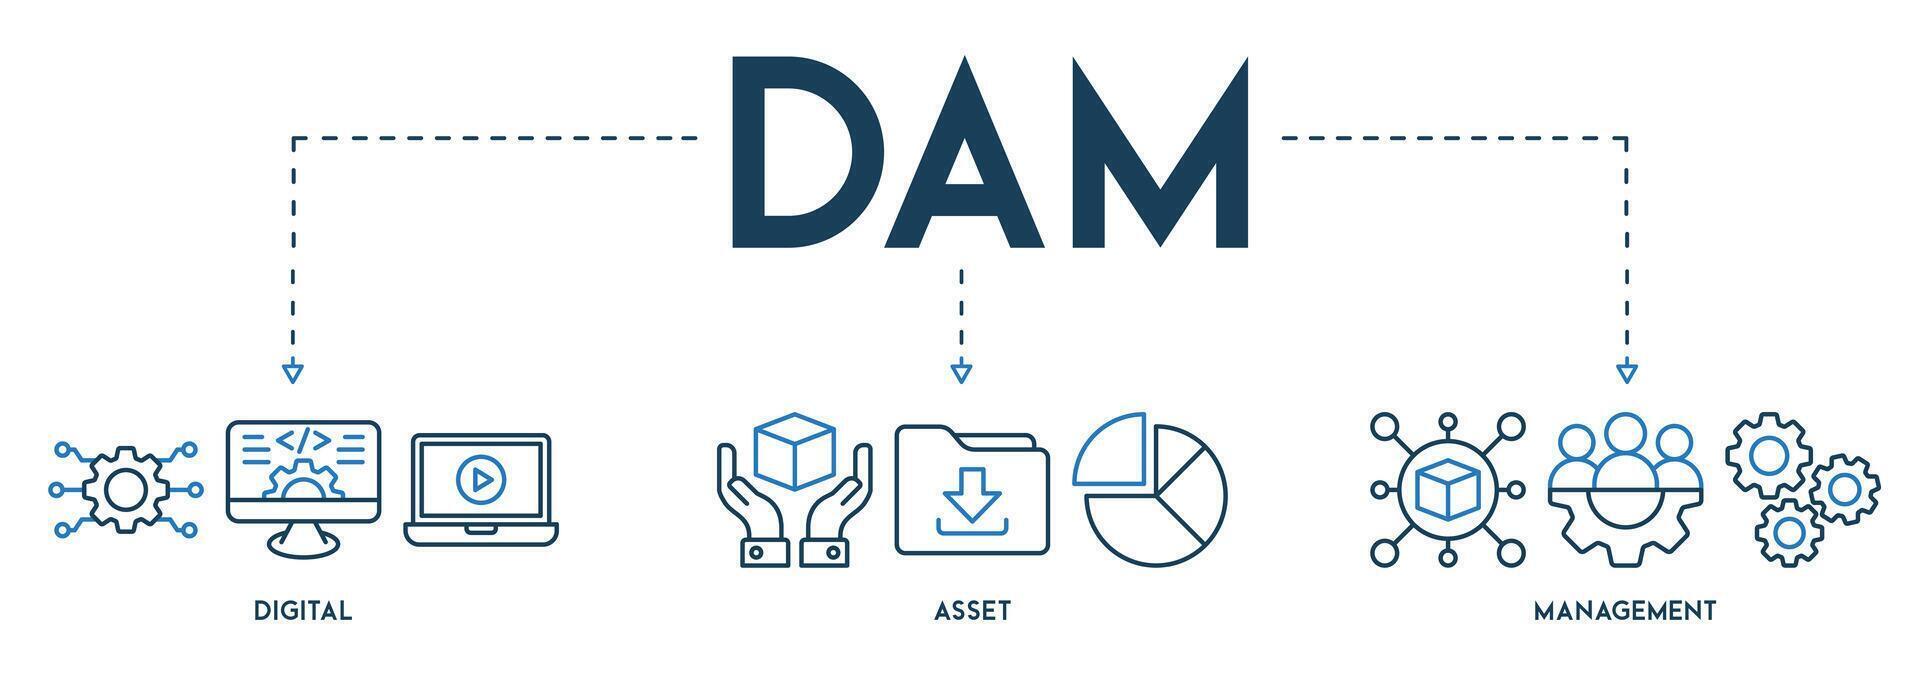 DAM Digital Asset Management Organization banner website icon vector illustration concept icon of digital assets management